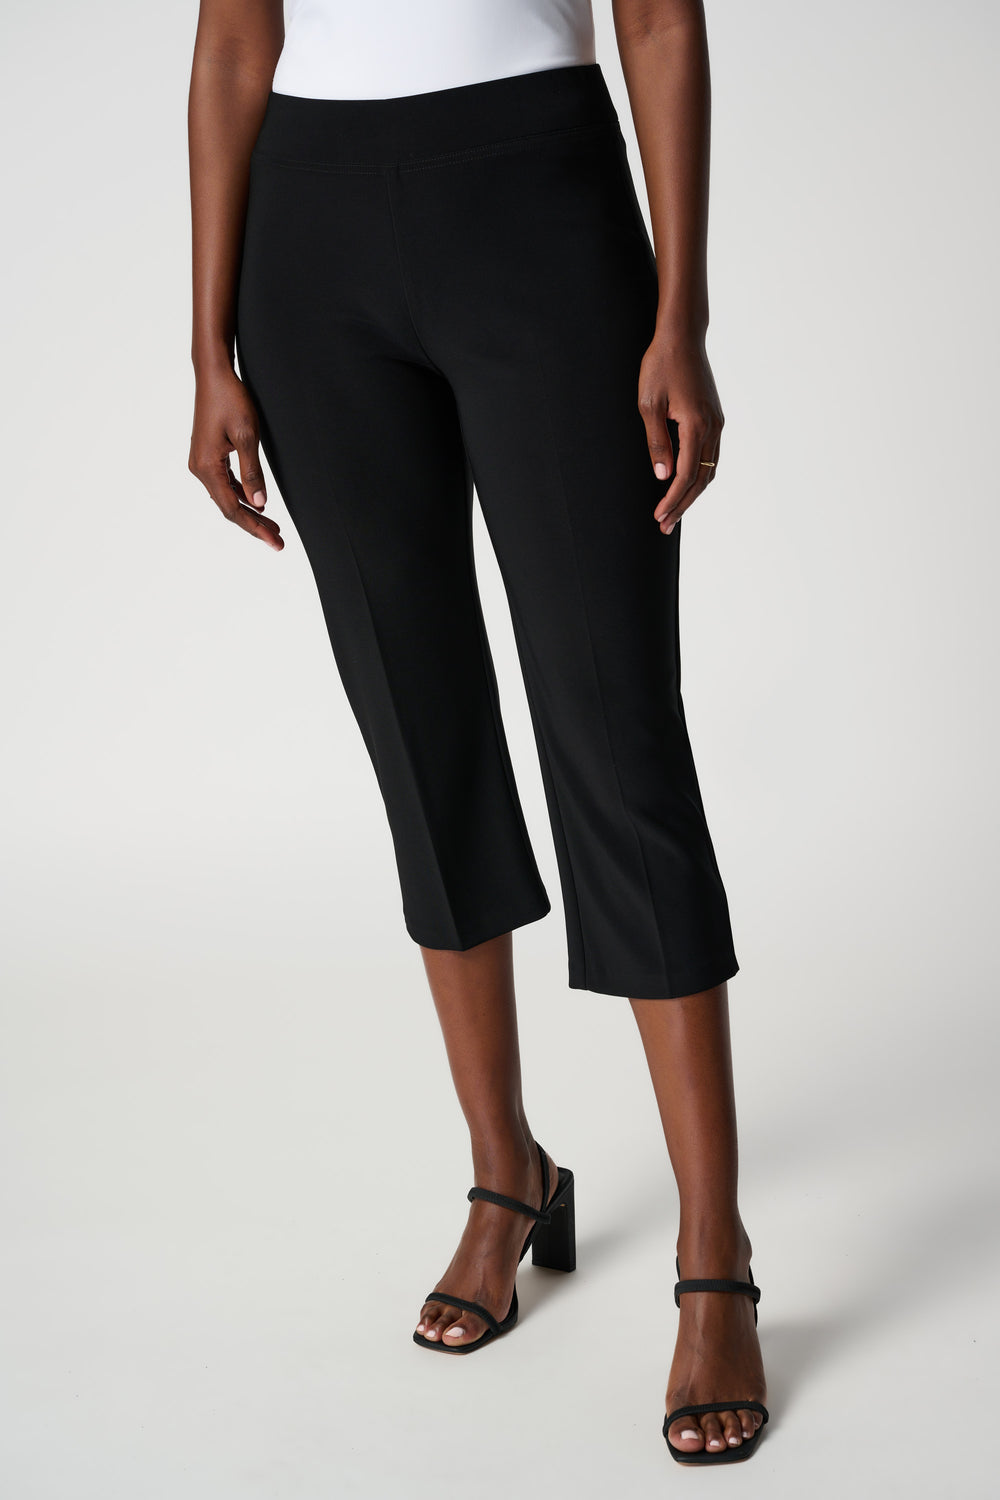 JOSEPH RIBKOFF SPRING '23 women's business casual cropped capri dress pants - black front